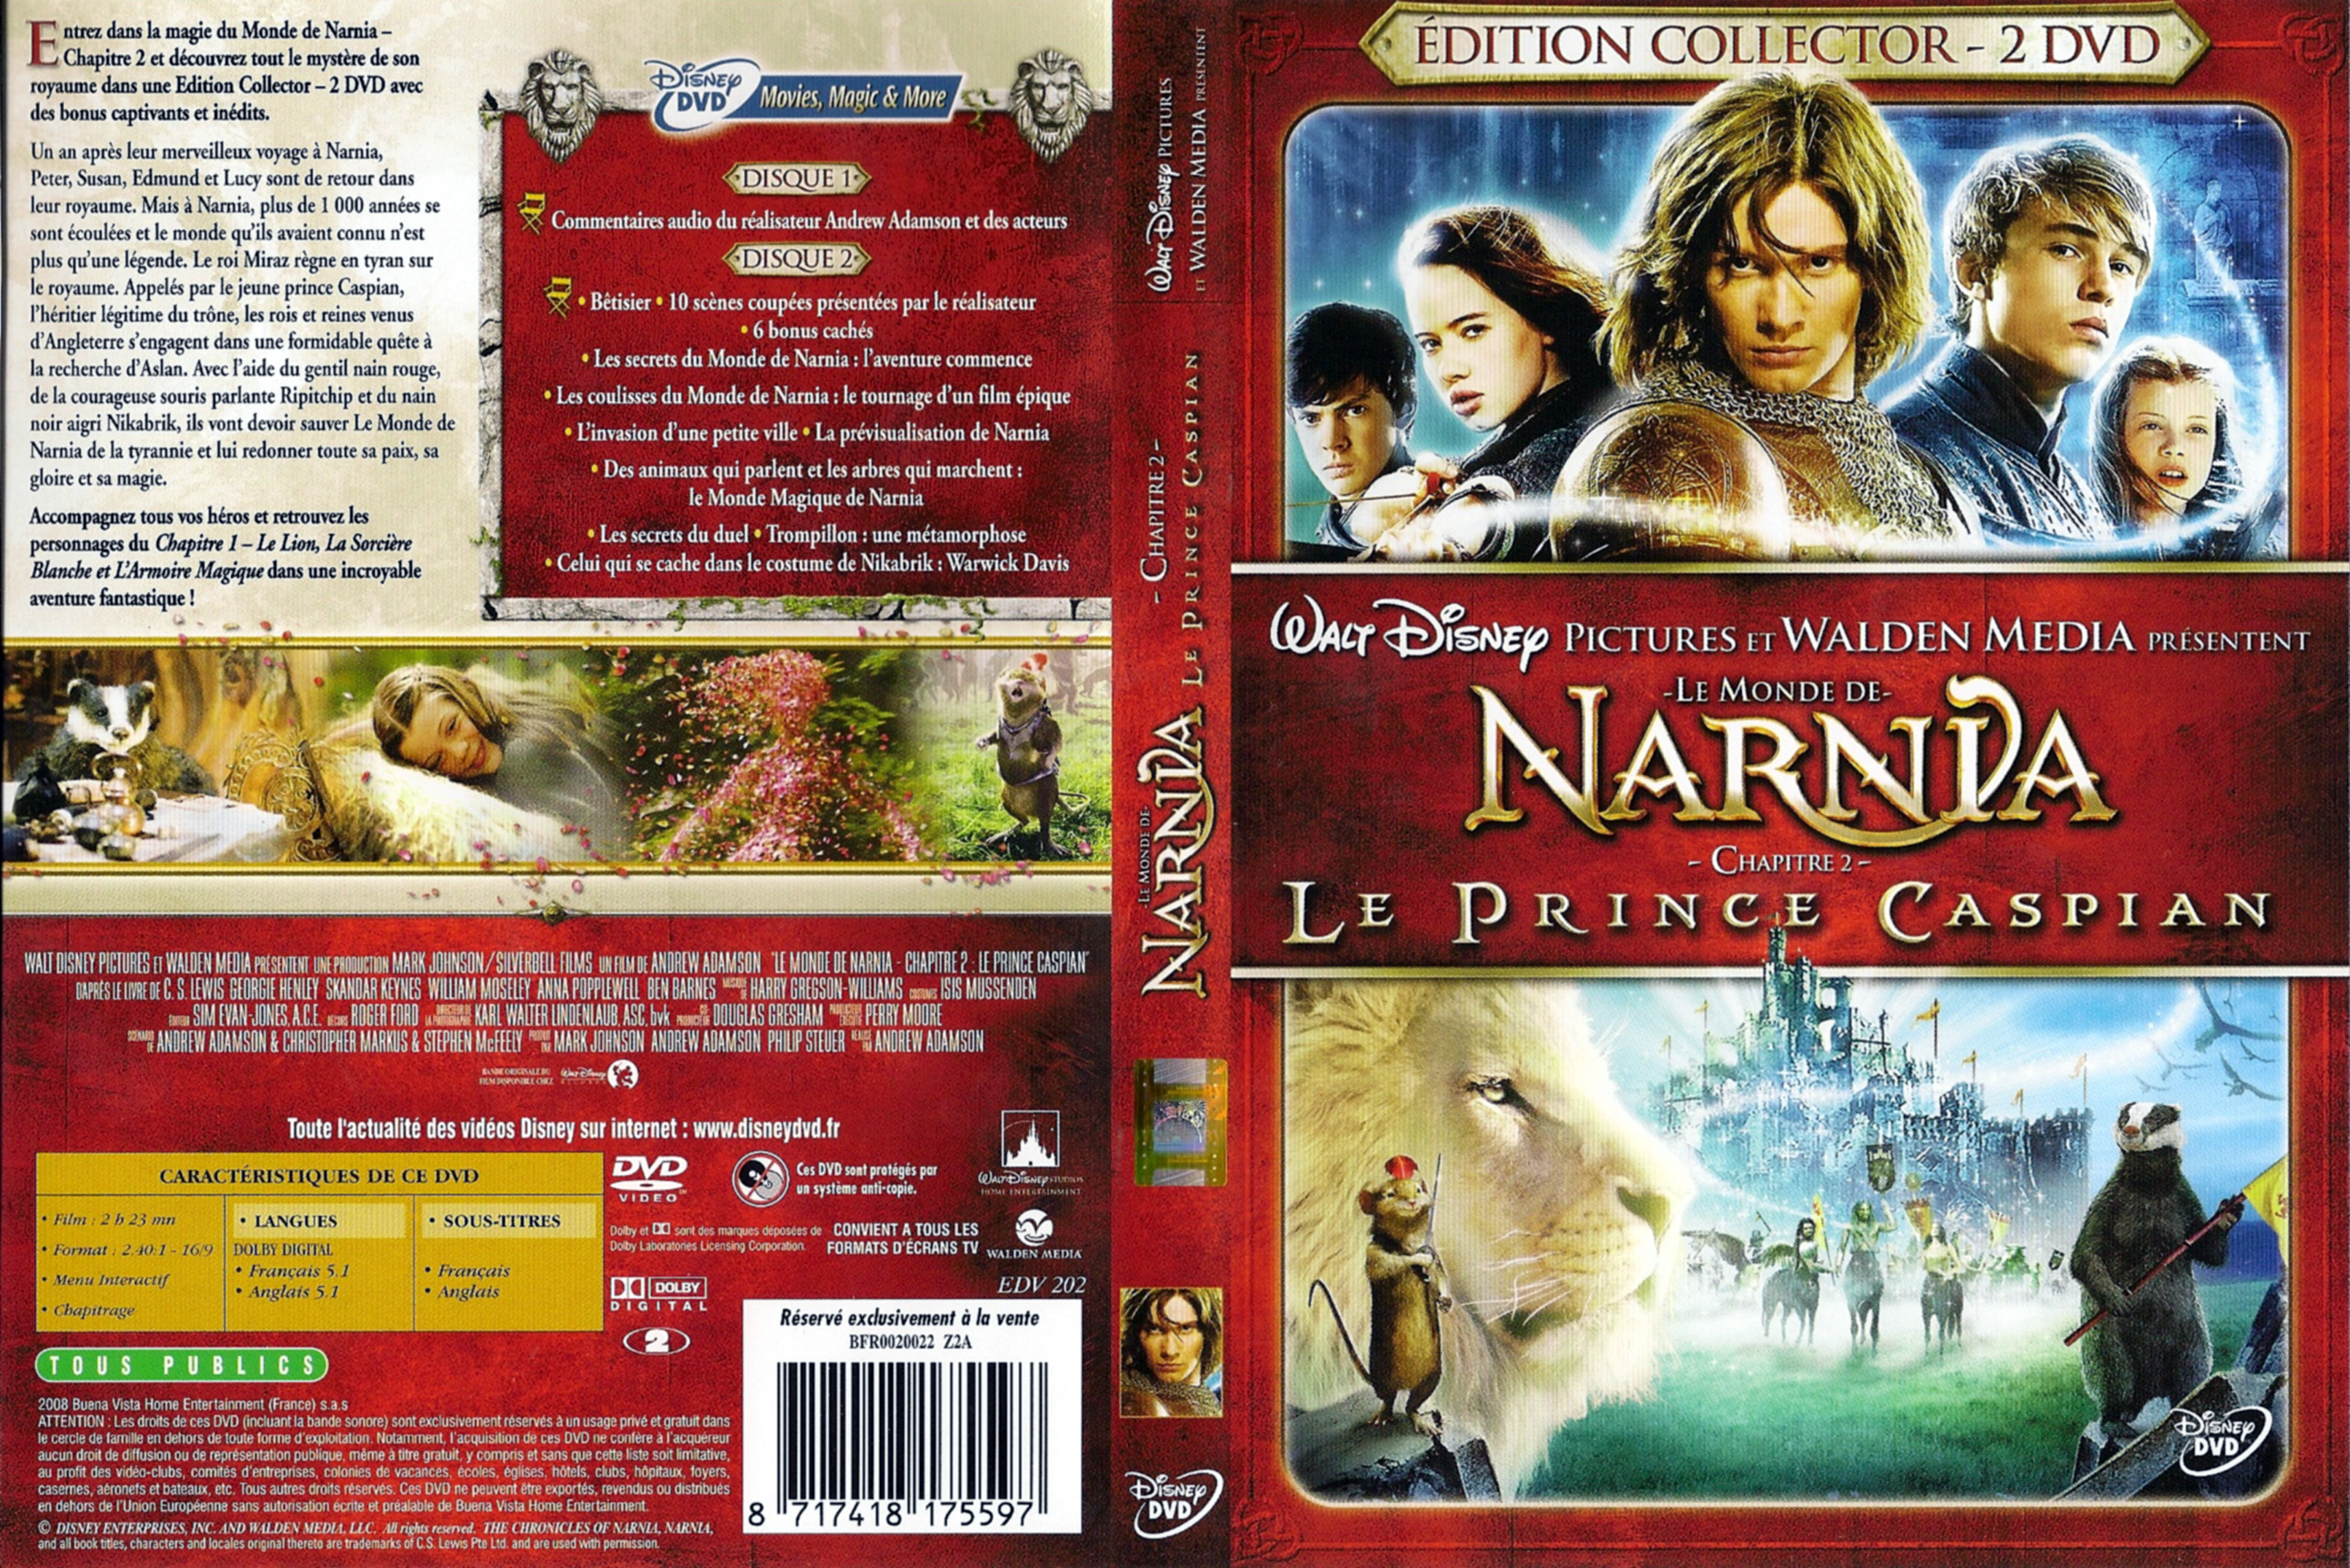 Jaquette DVD Le Monde de Narnia chapitre 2 - Prince Caspian v3